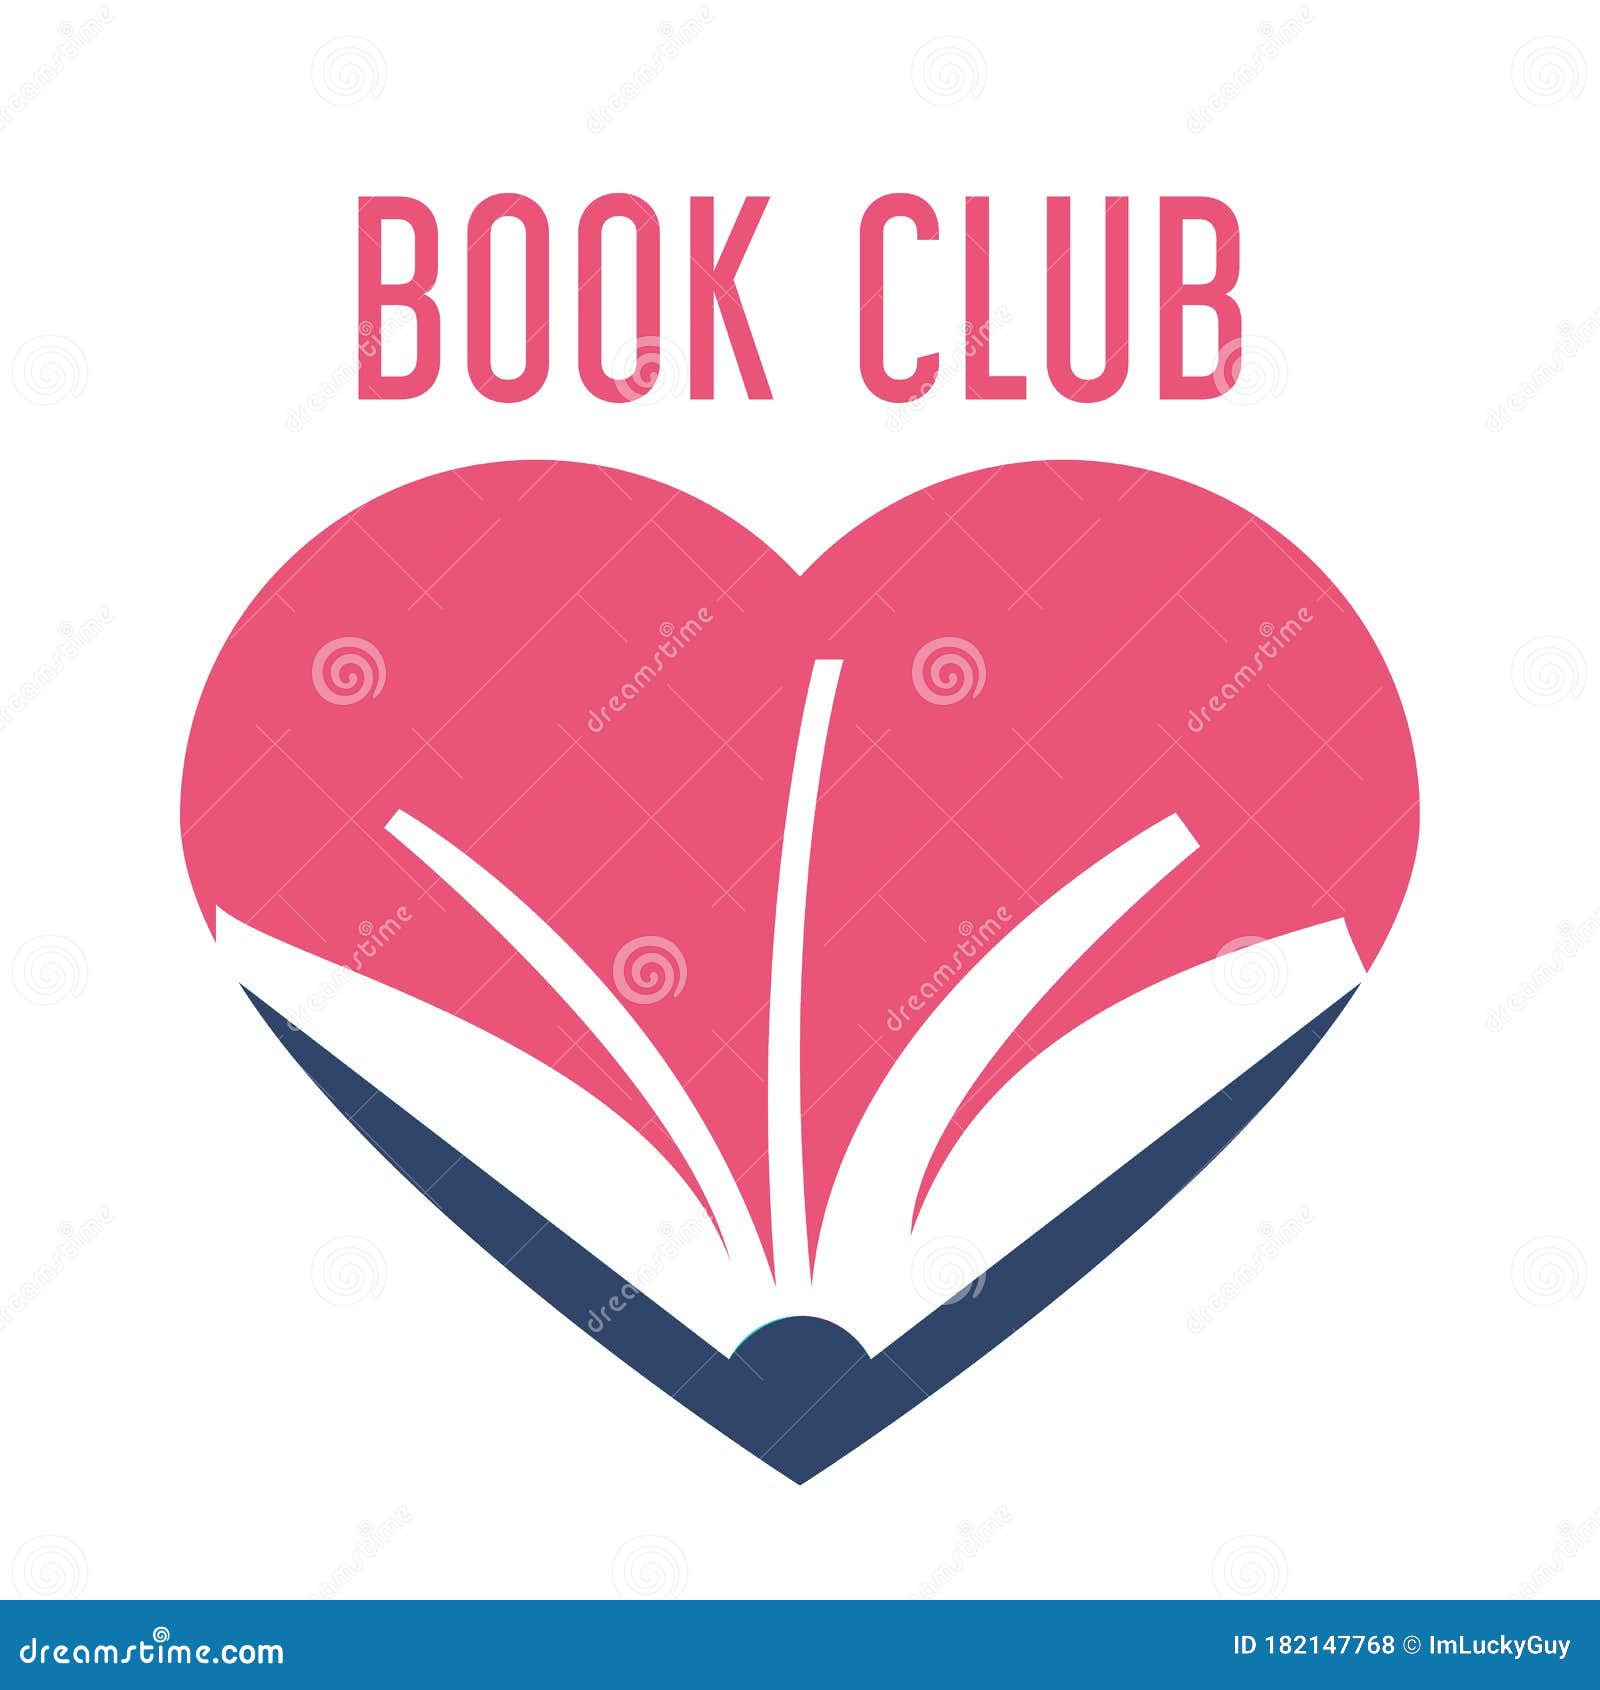 book club logo ideas 2